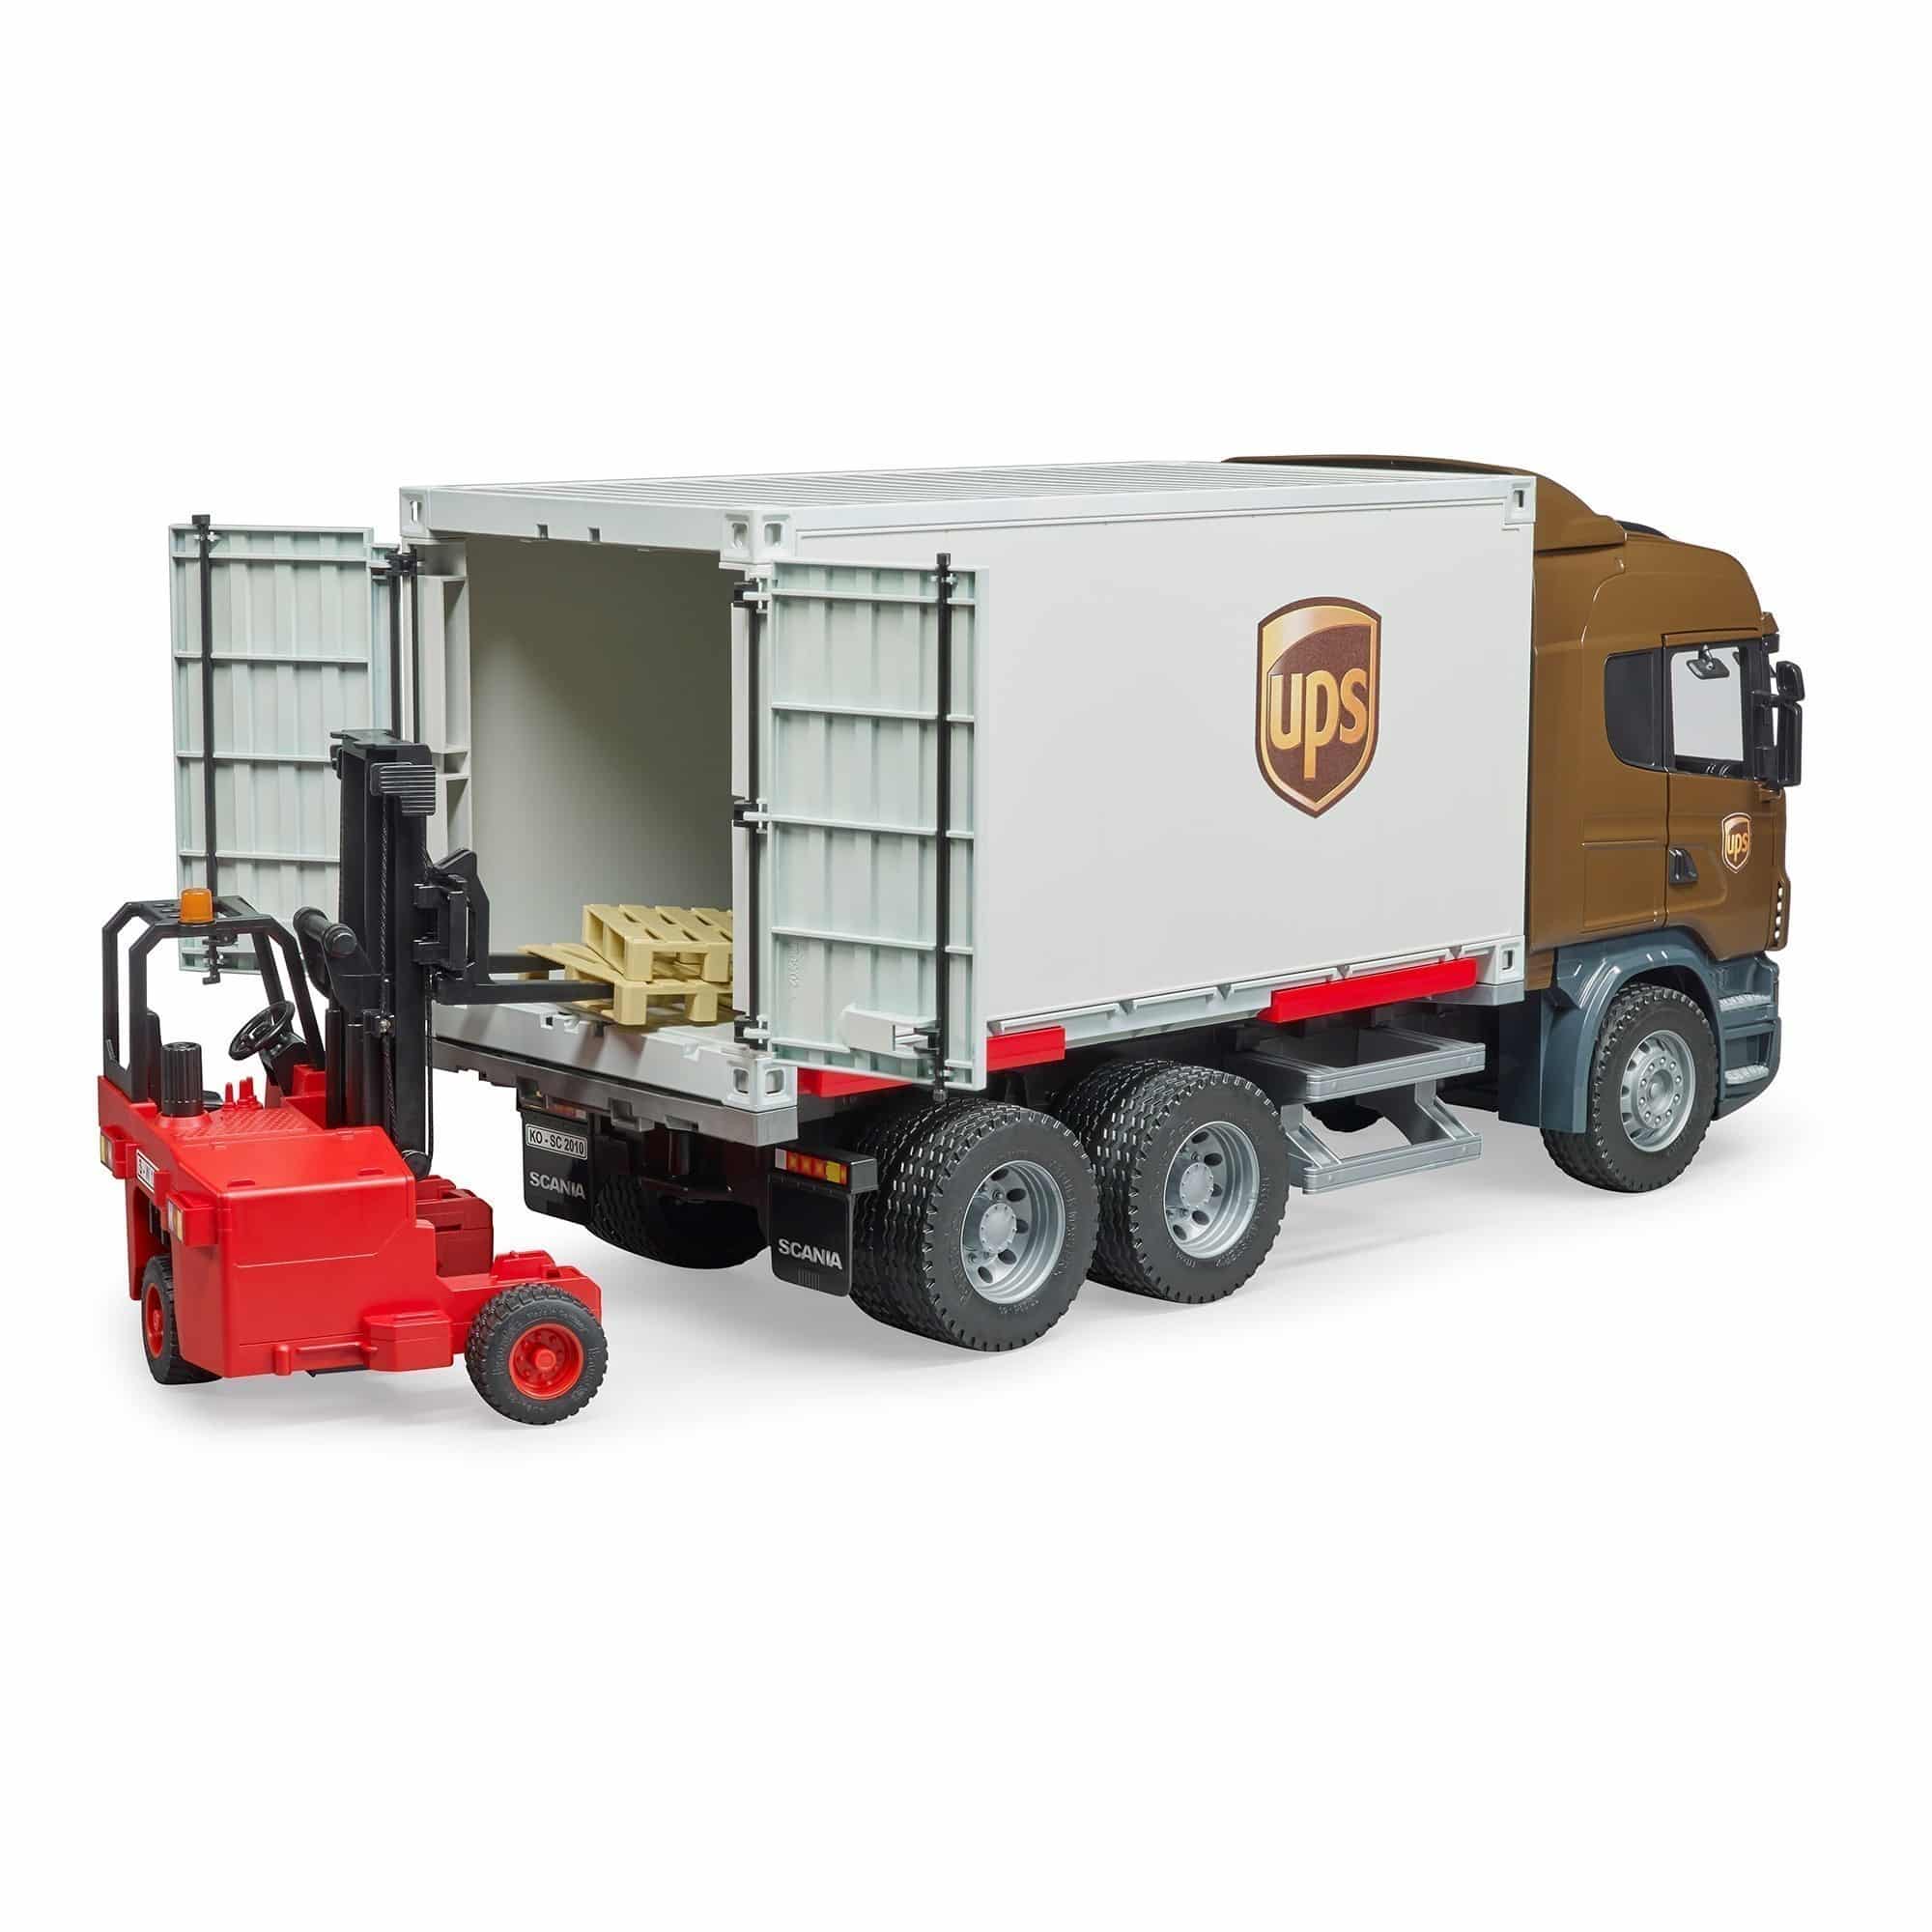 Bruder - Scania R-Series UPS Logistics Truck With Mobile Forklift